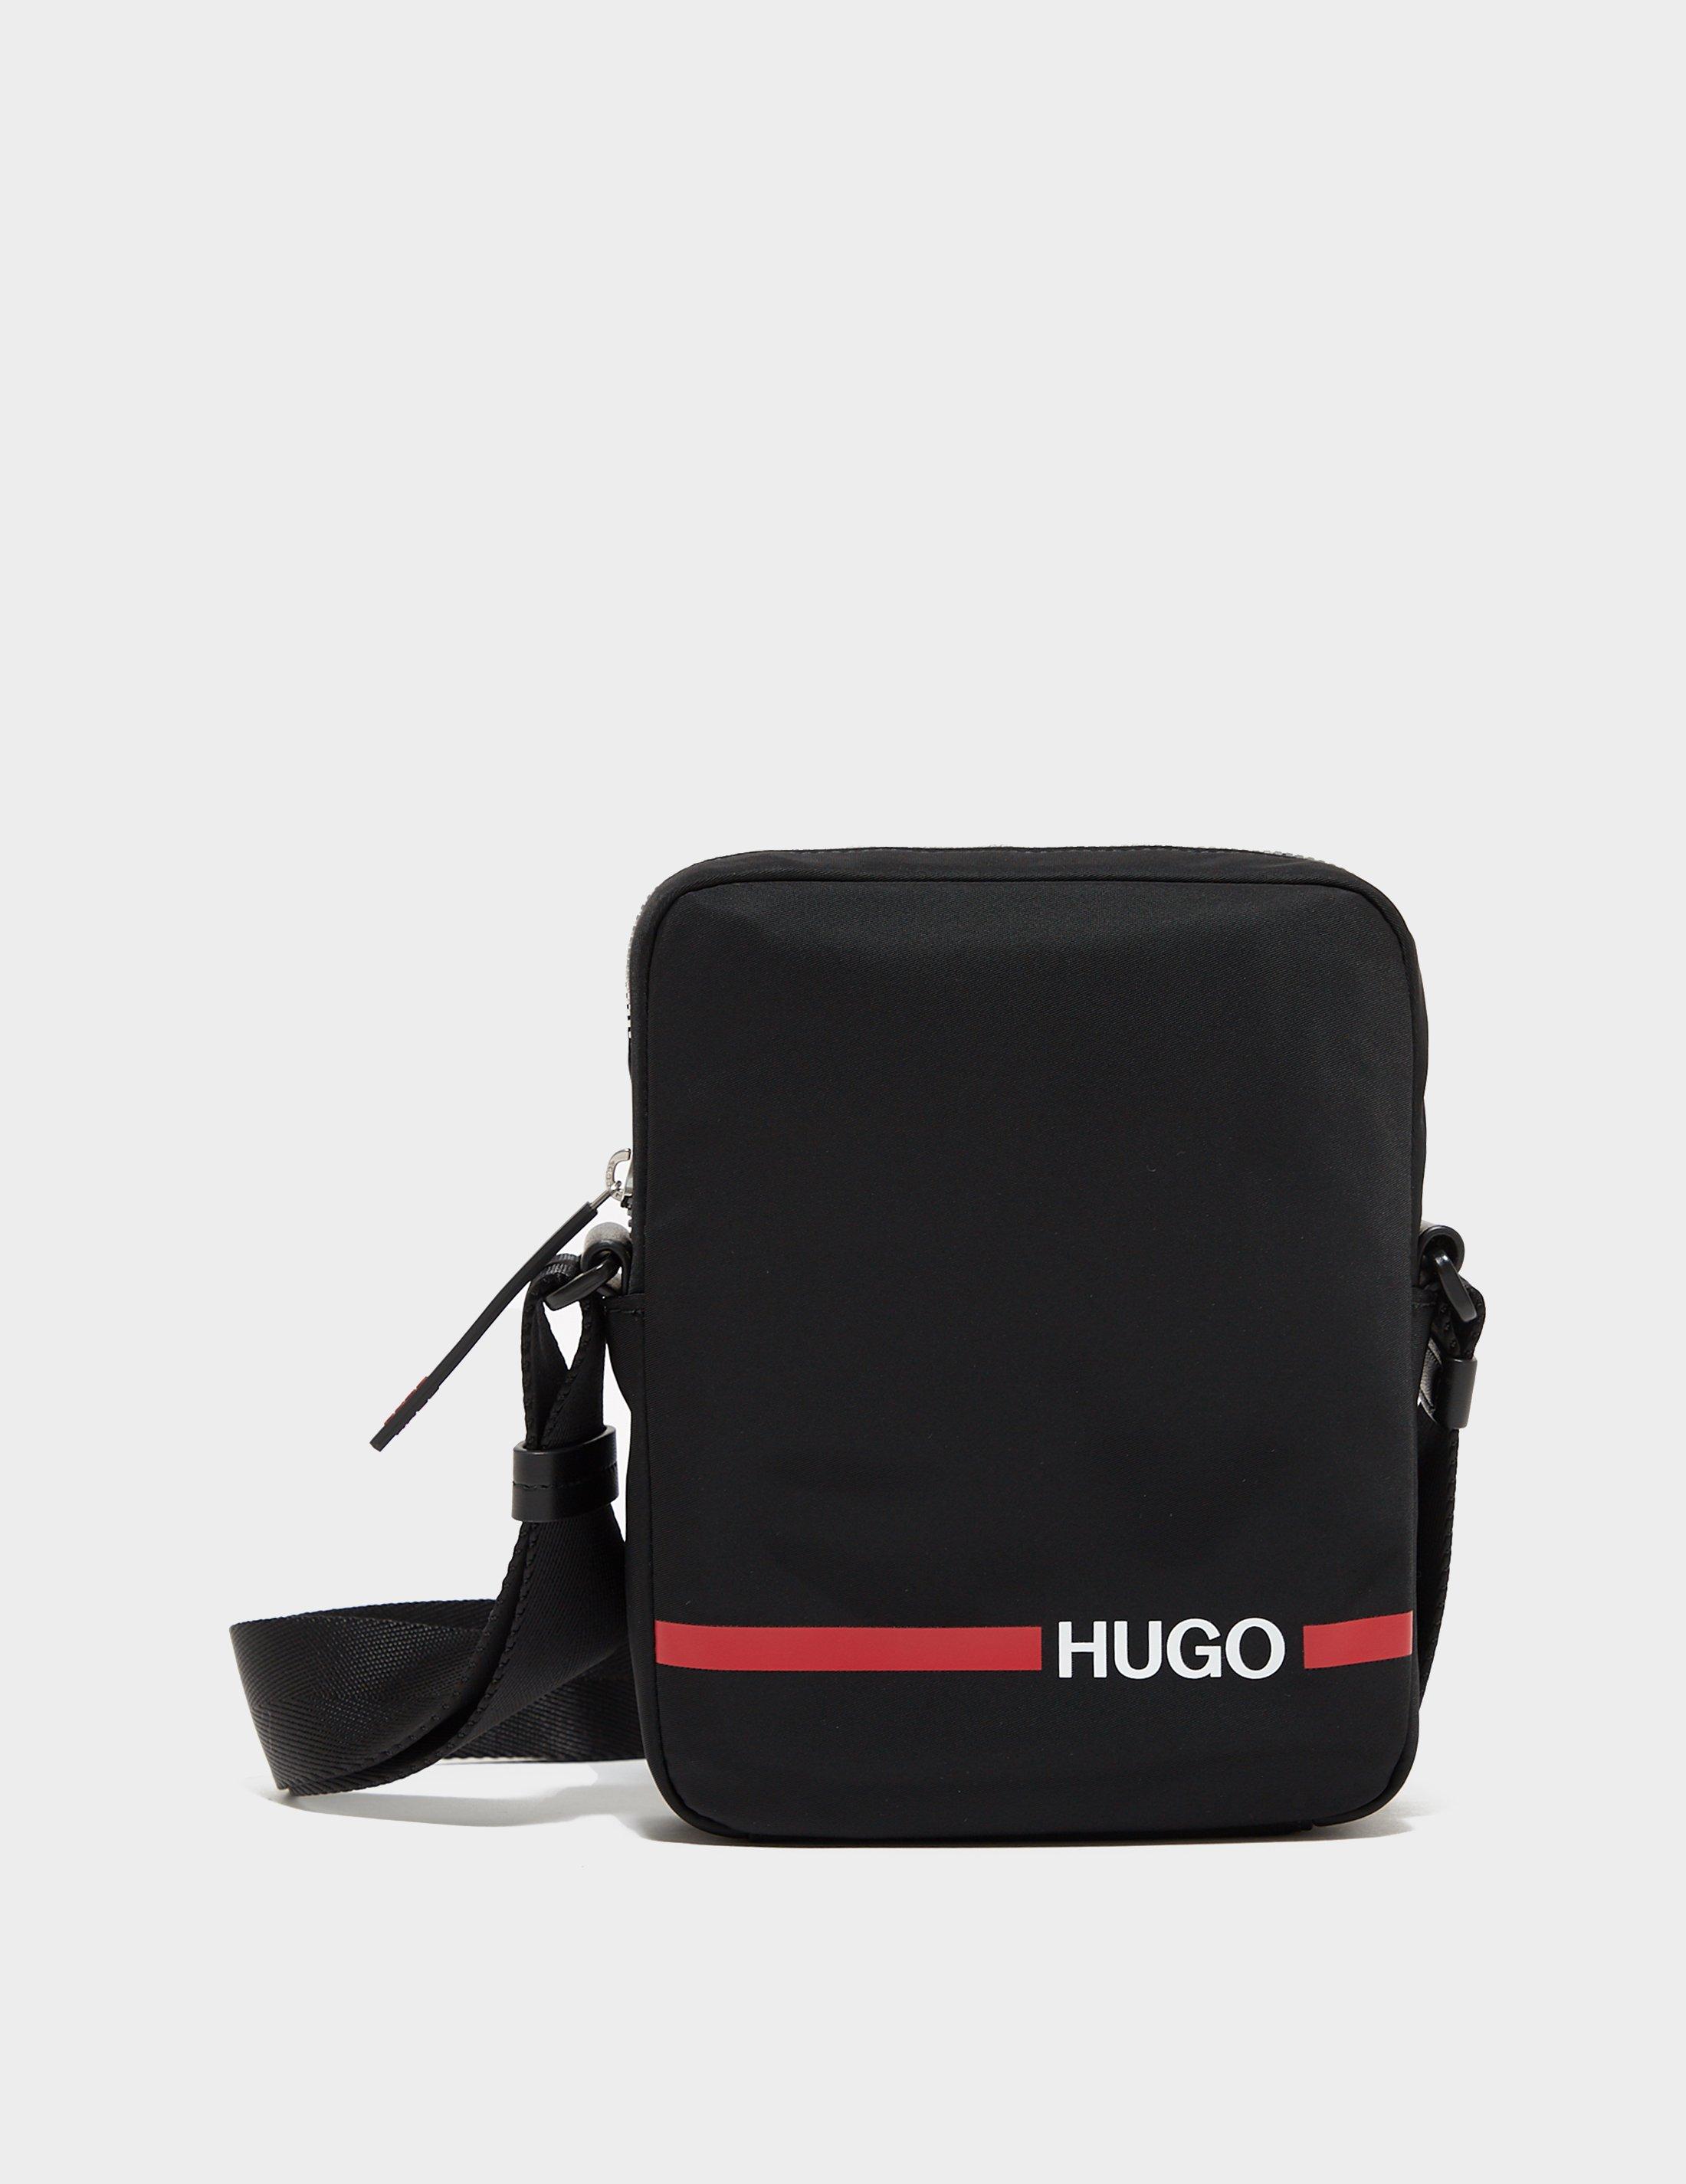 hugo record cross body bag